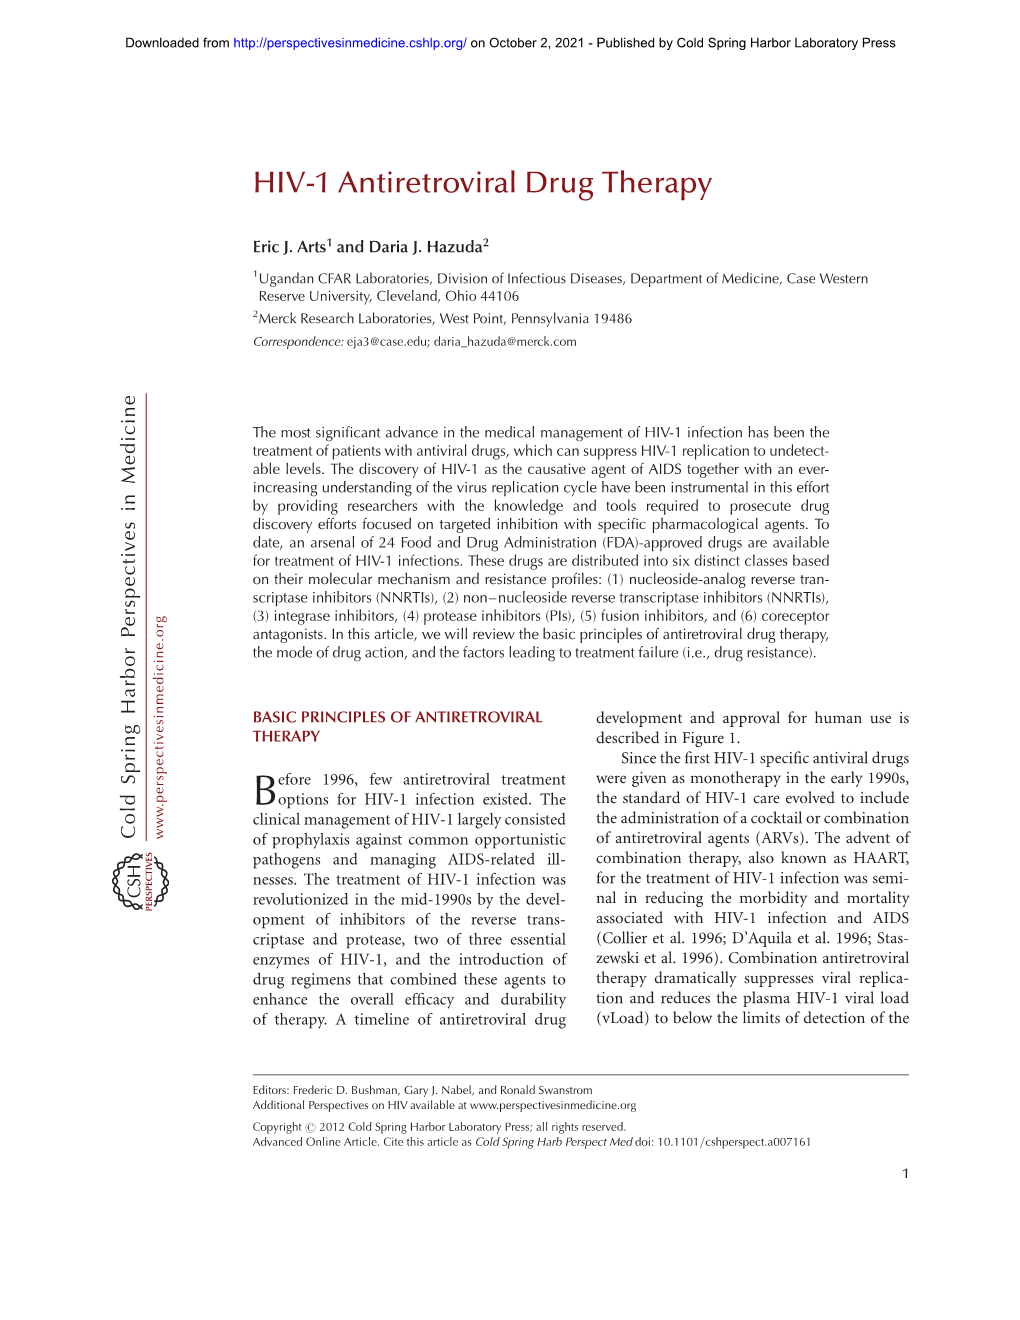 HIV-1 Antiretroviral Drug Therapy